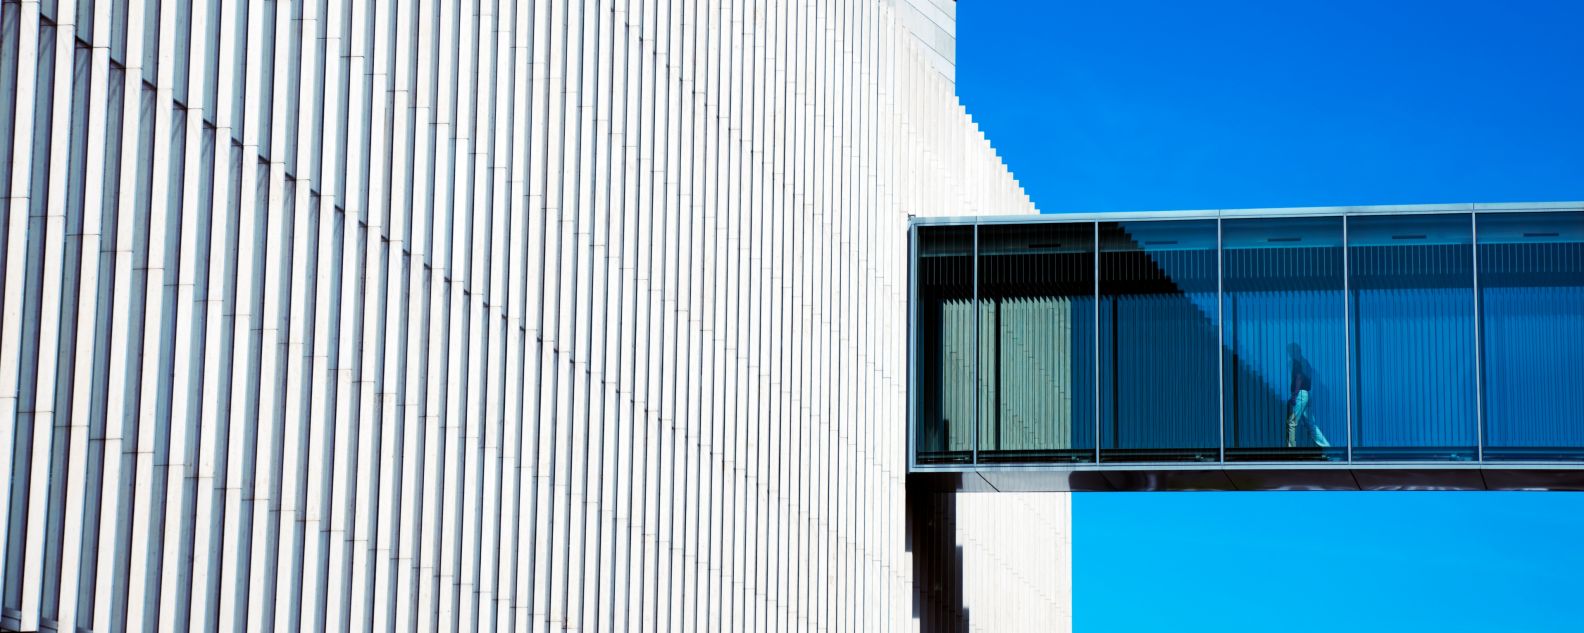 A person strolls through a modern building's skywalk